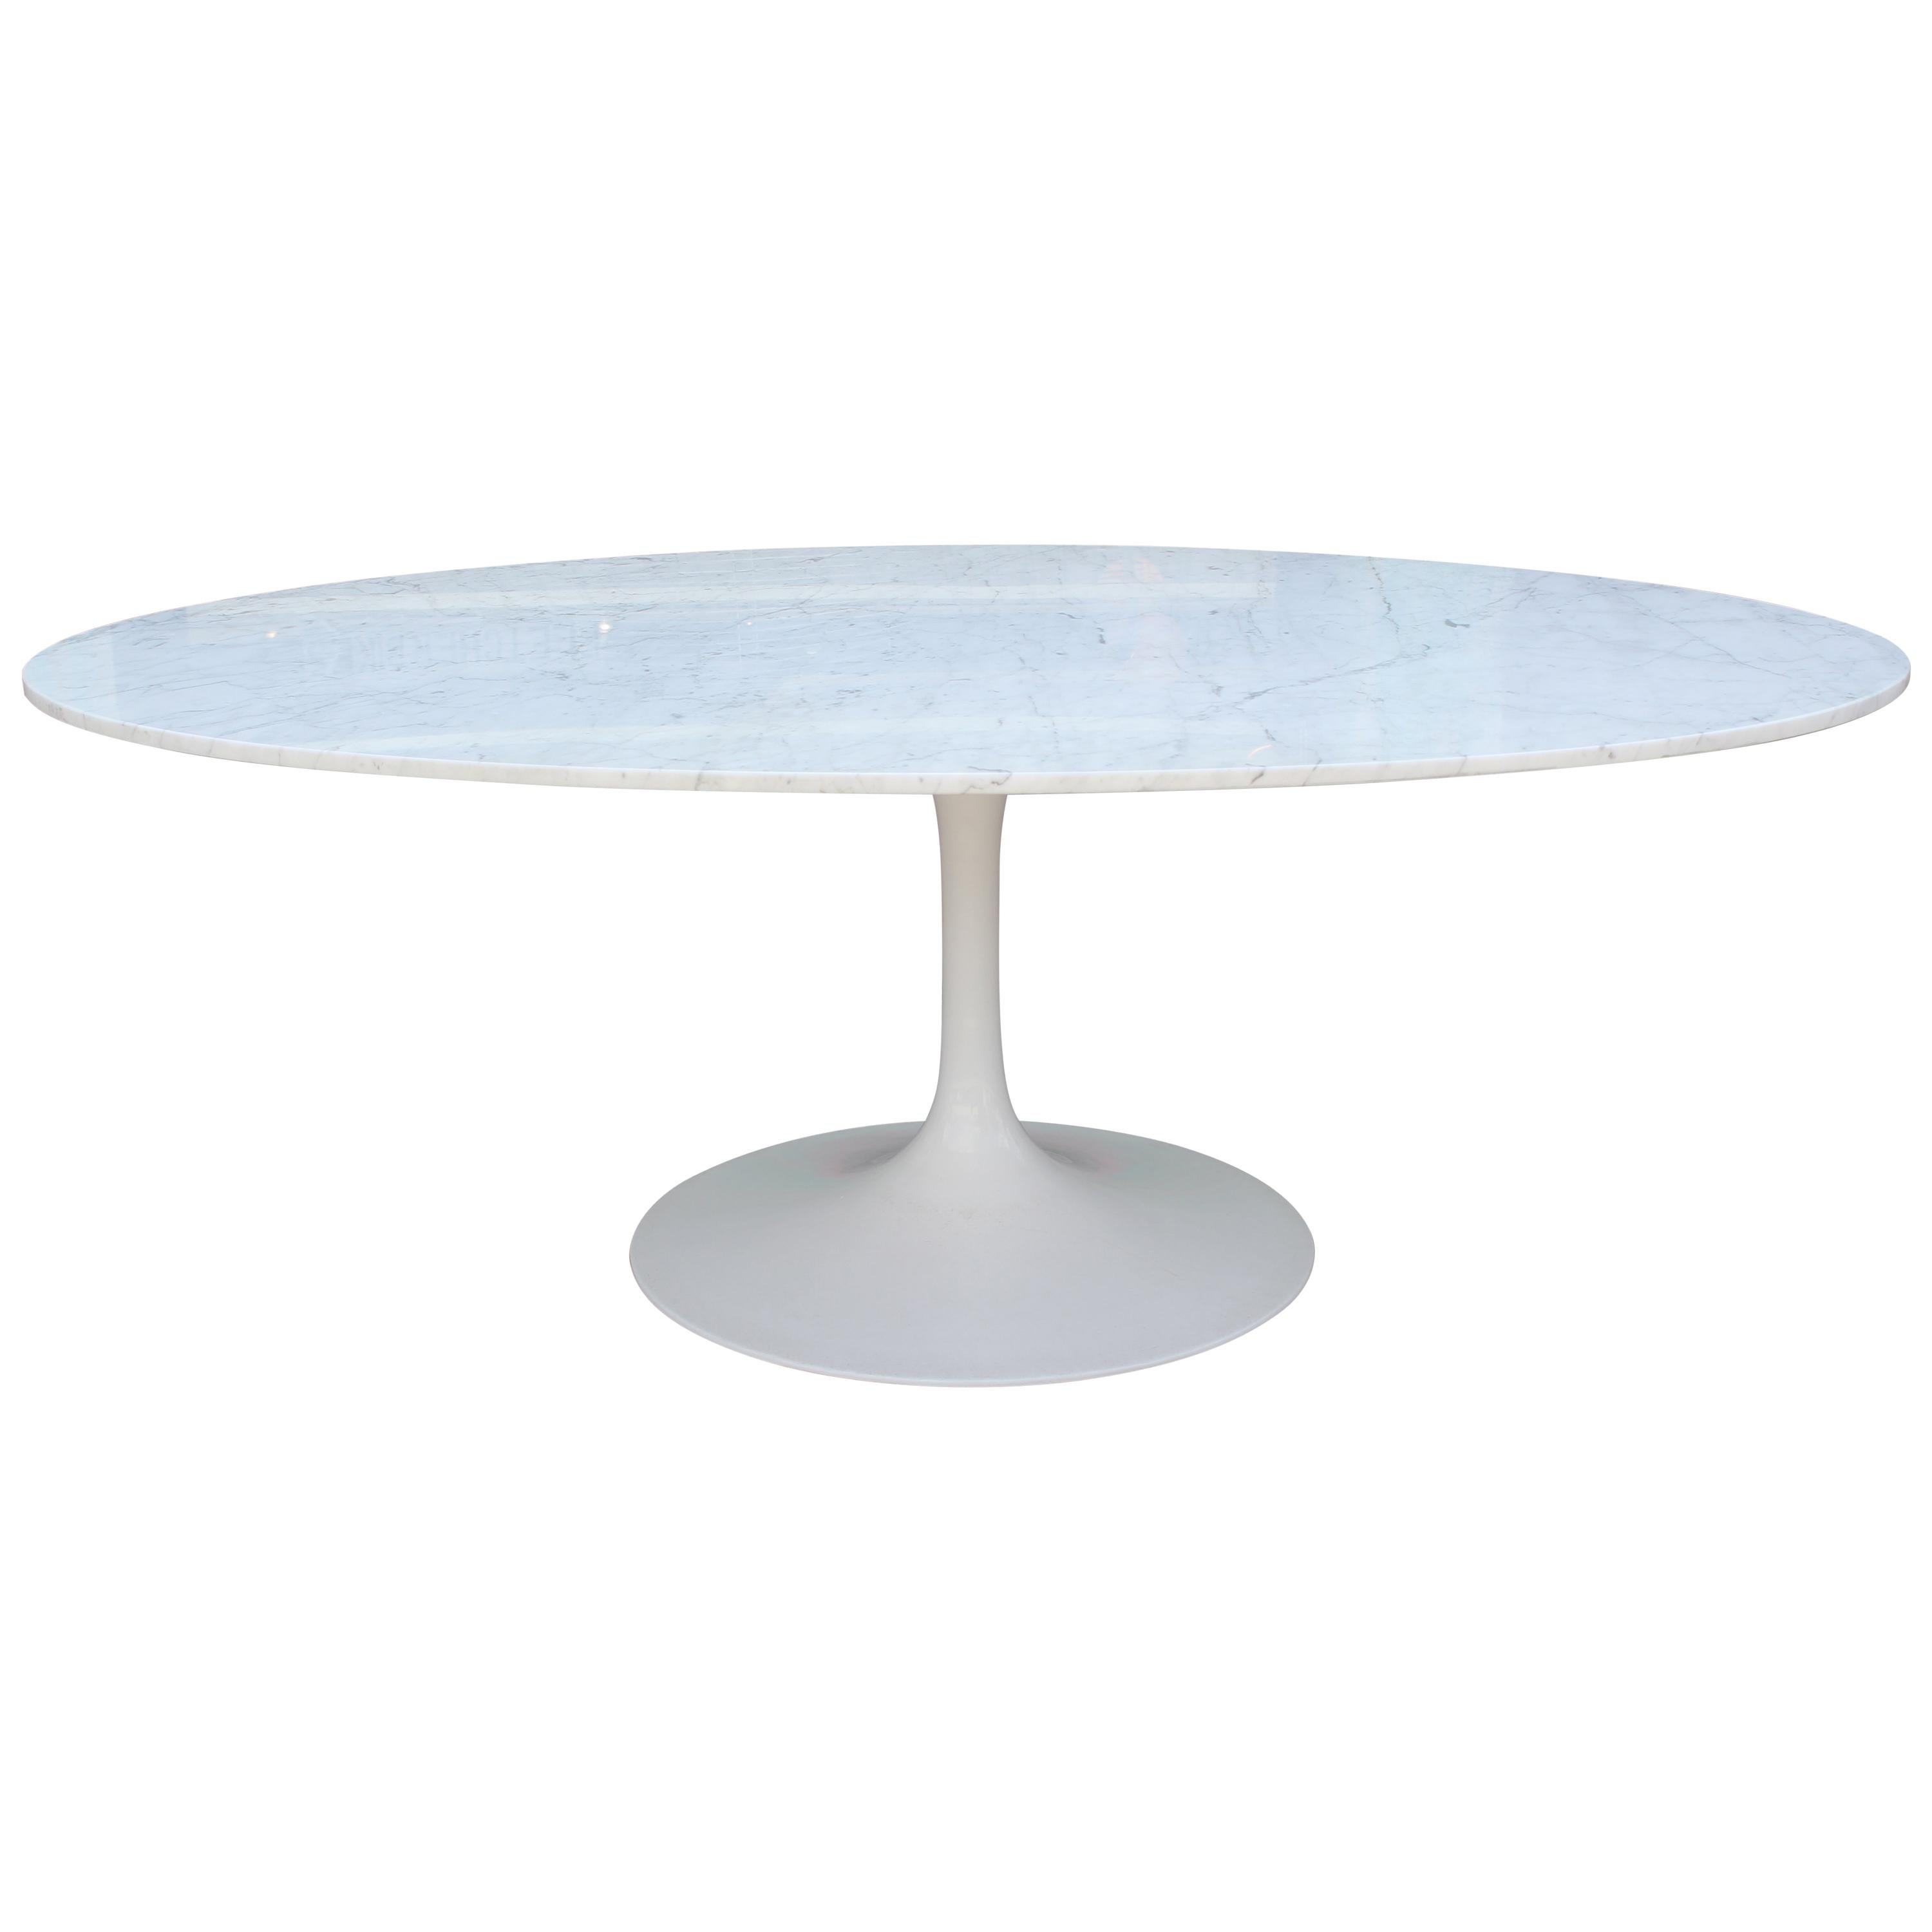 Modern Maurice Burke Saarinen Style Table with an Oval Carrara Marble Top